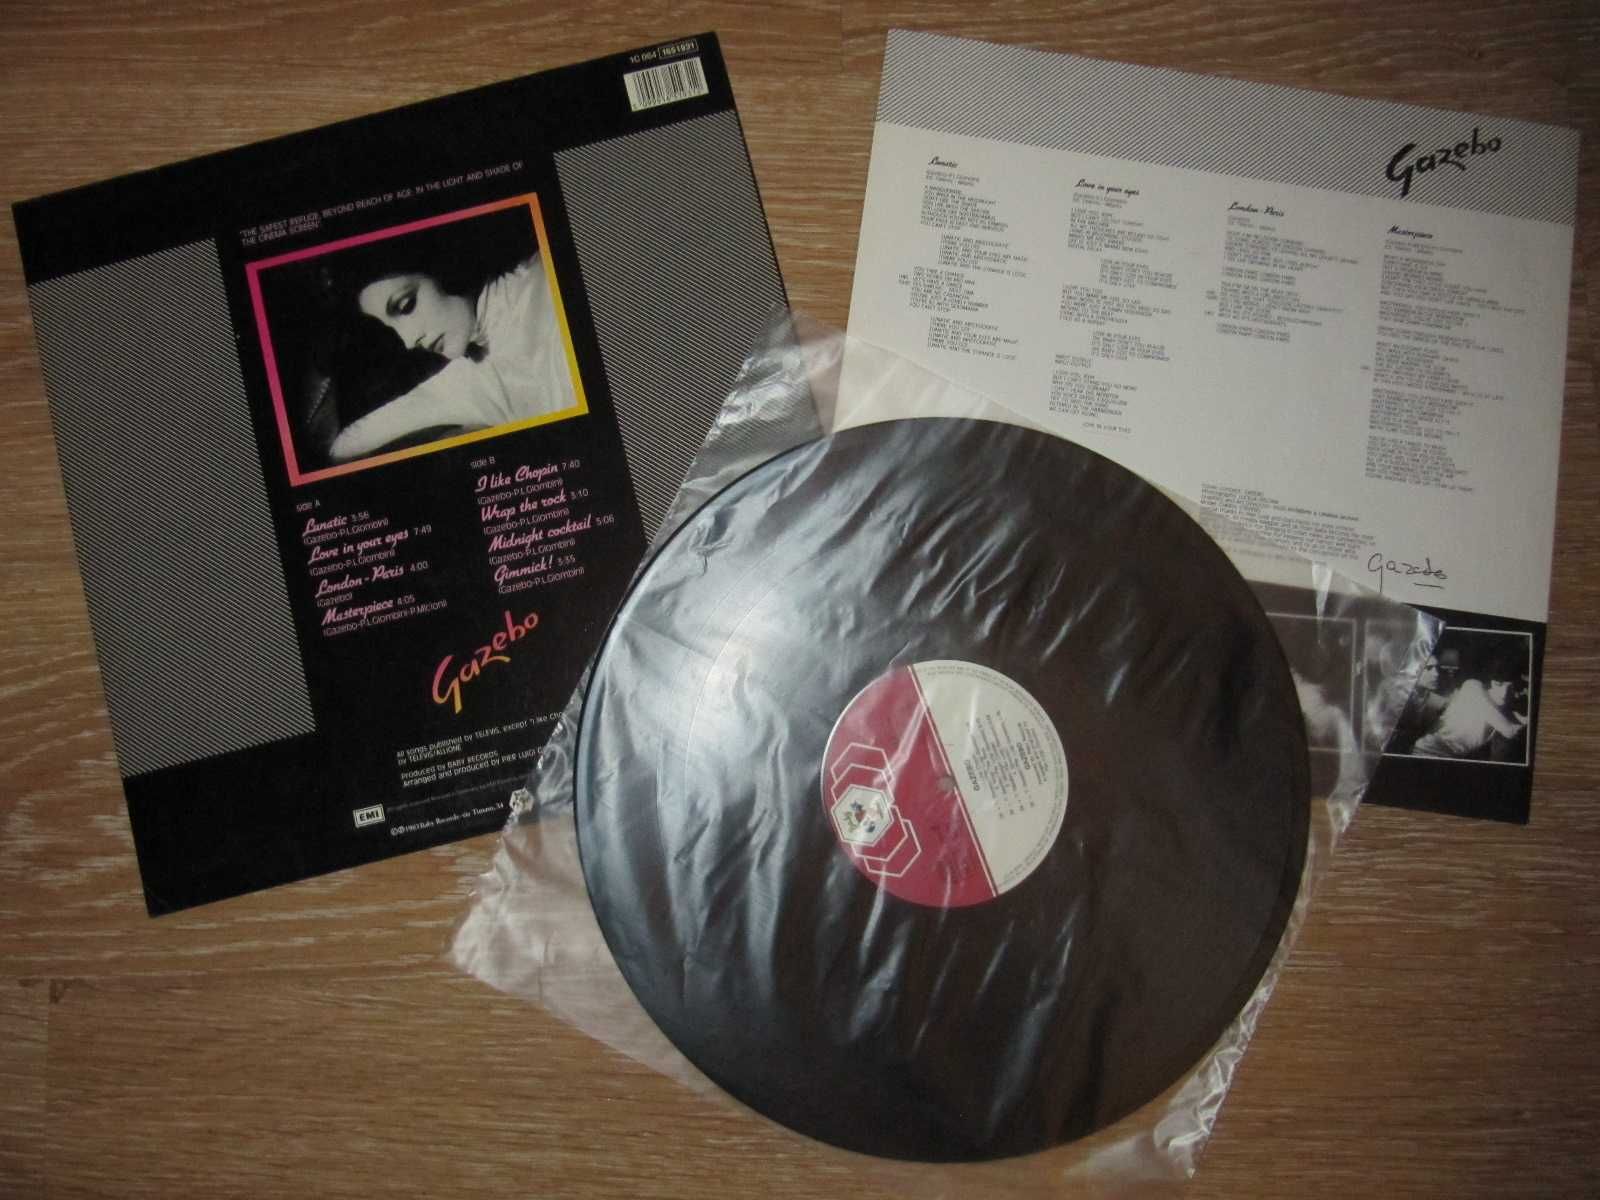 Виниловый Альбом GAZEBO - I Like Chopin - 1983 *ОРИГИНАЛ (NM)